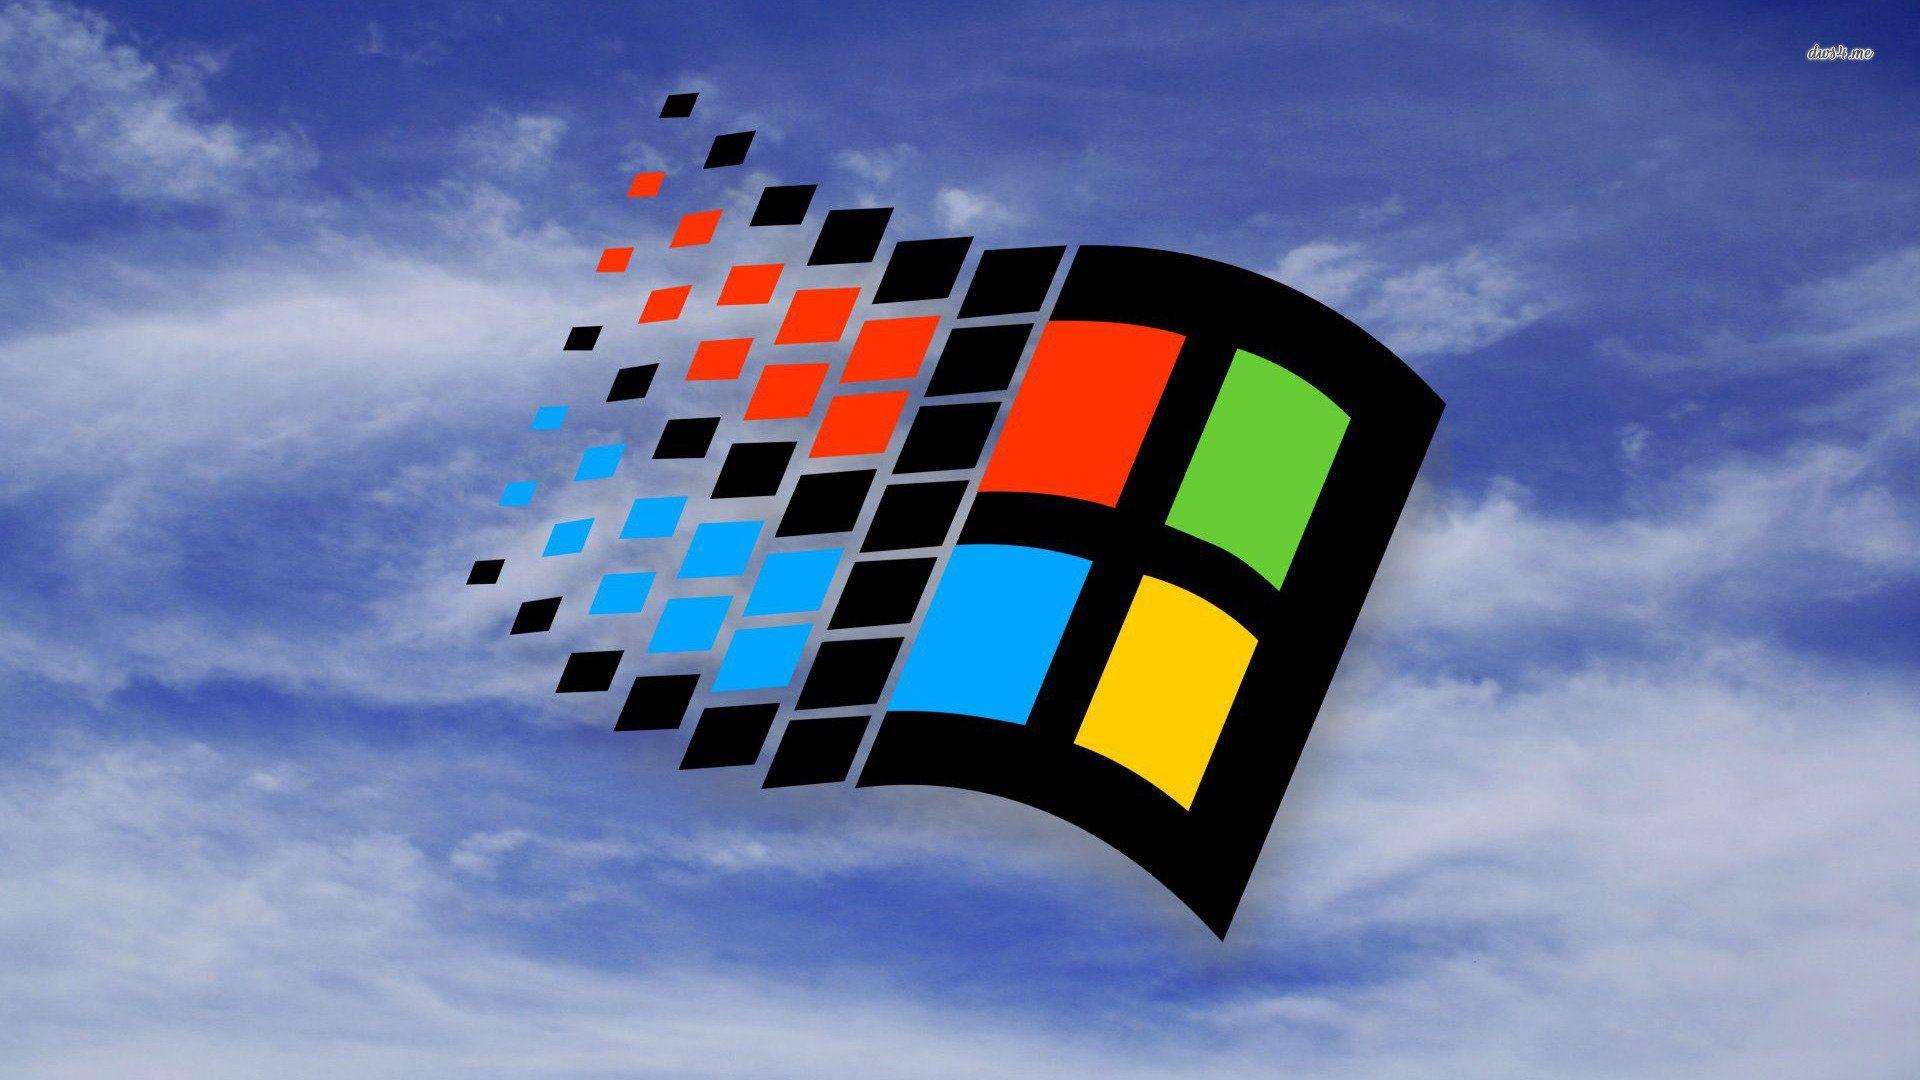 1920x1080 Hình nền Windows 98 RBP1Z (1920x1080)